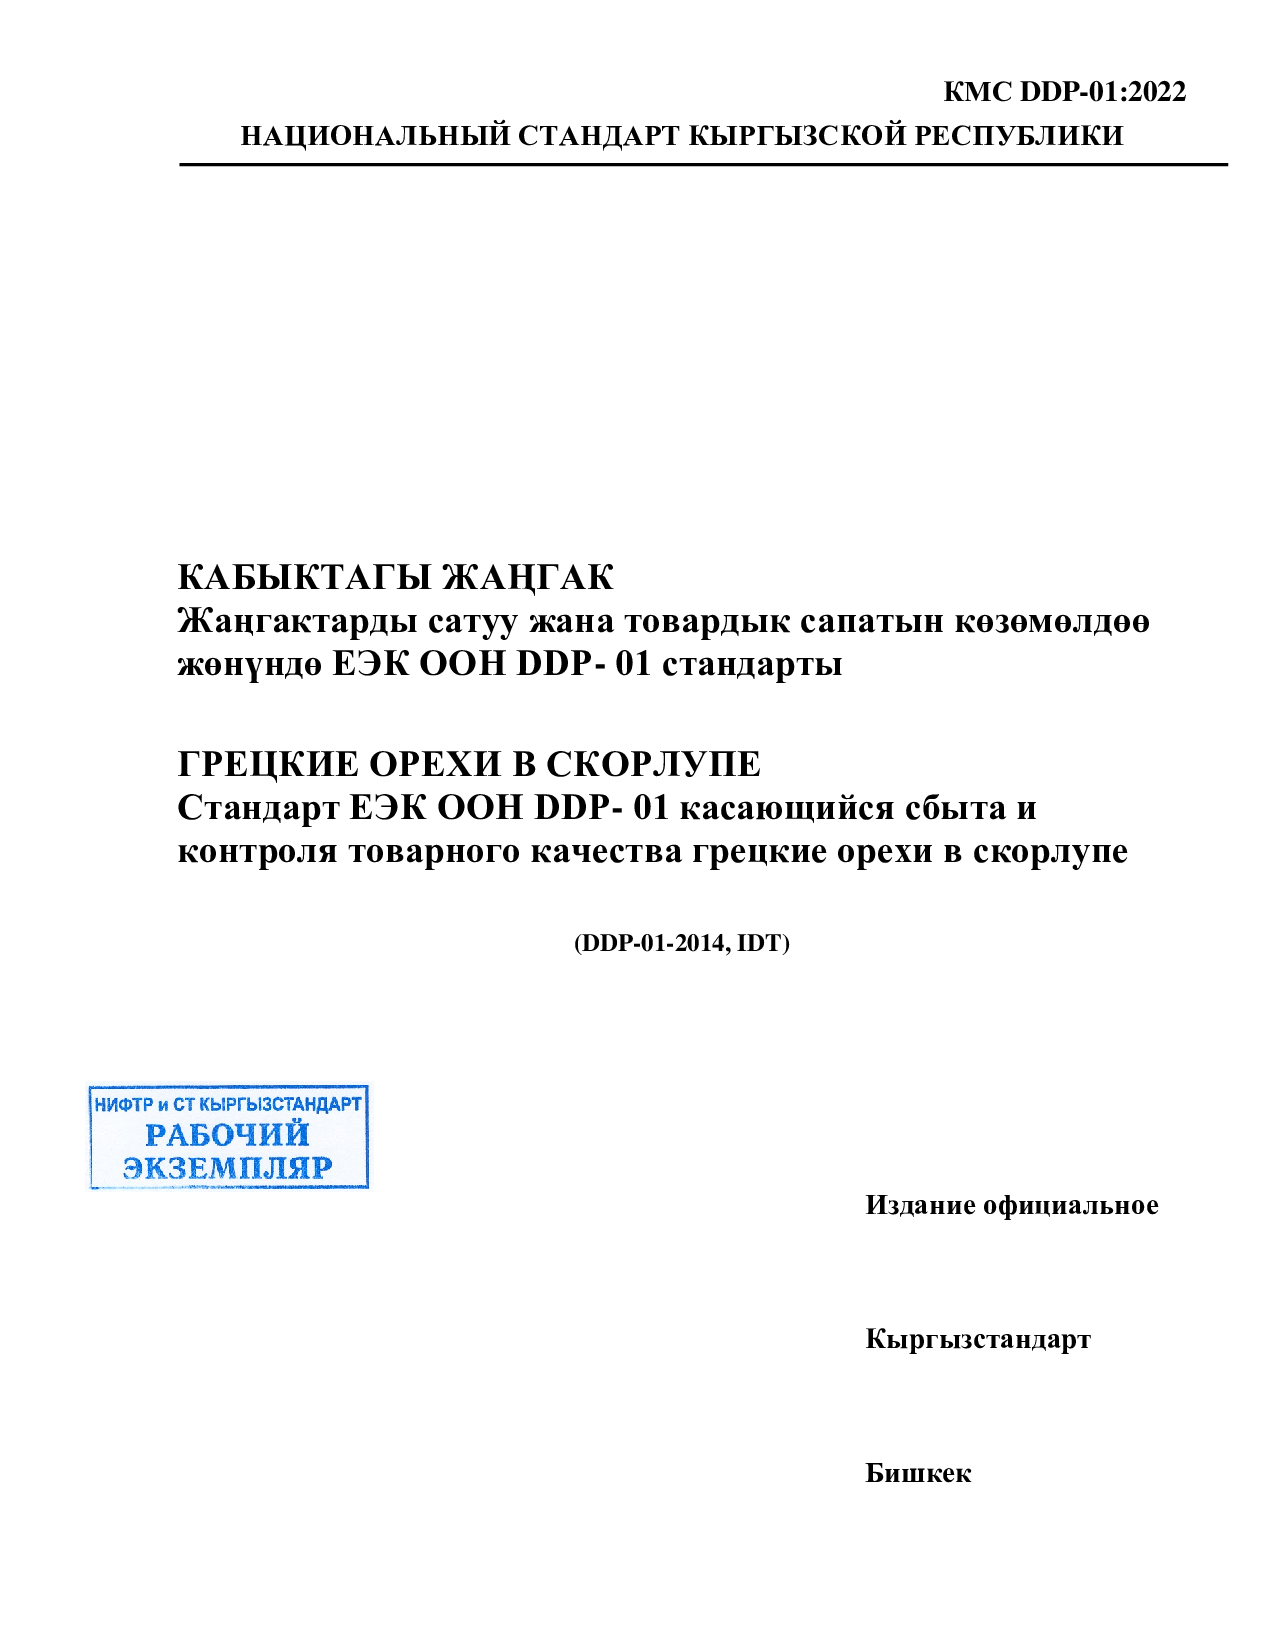 Грецкие орехи в скорлупе. Стандарт ЕЭК ООН DDР- 01 касающийся сбыта и  контроля товарного качества грецкие орехи в скорлупе